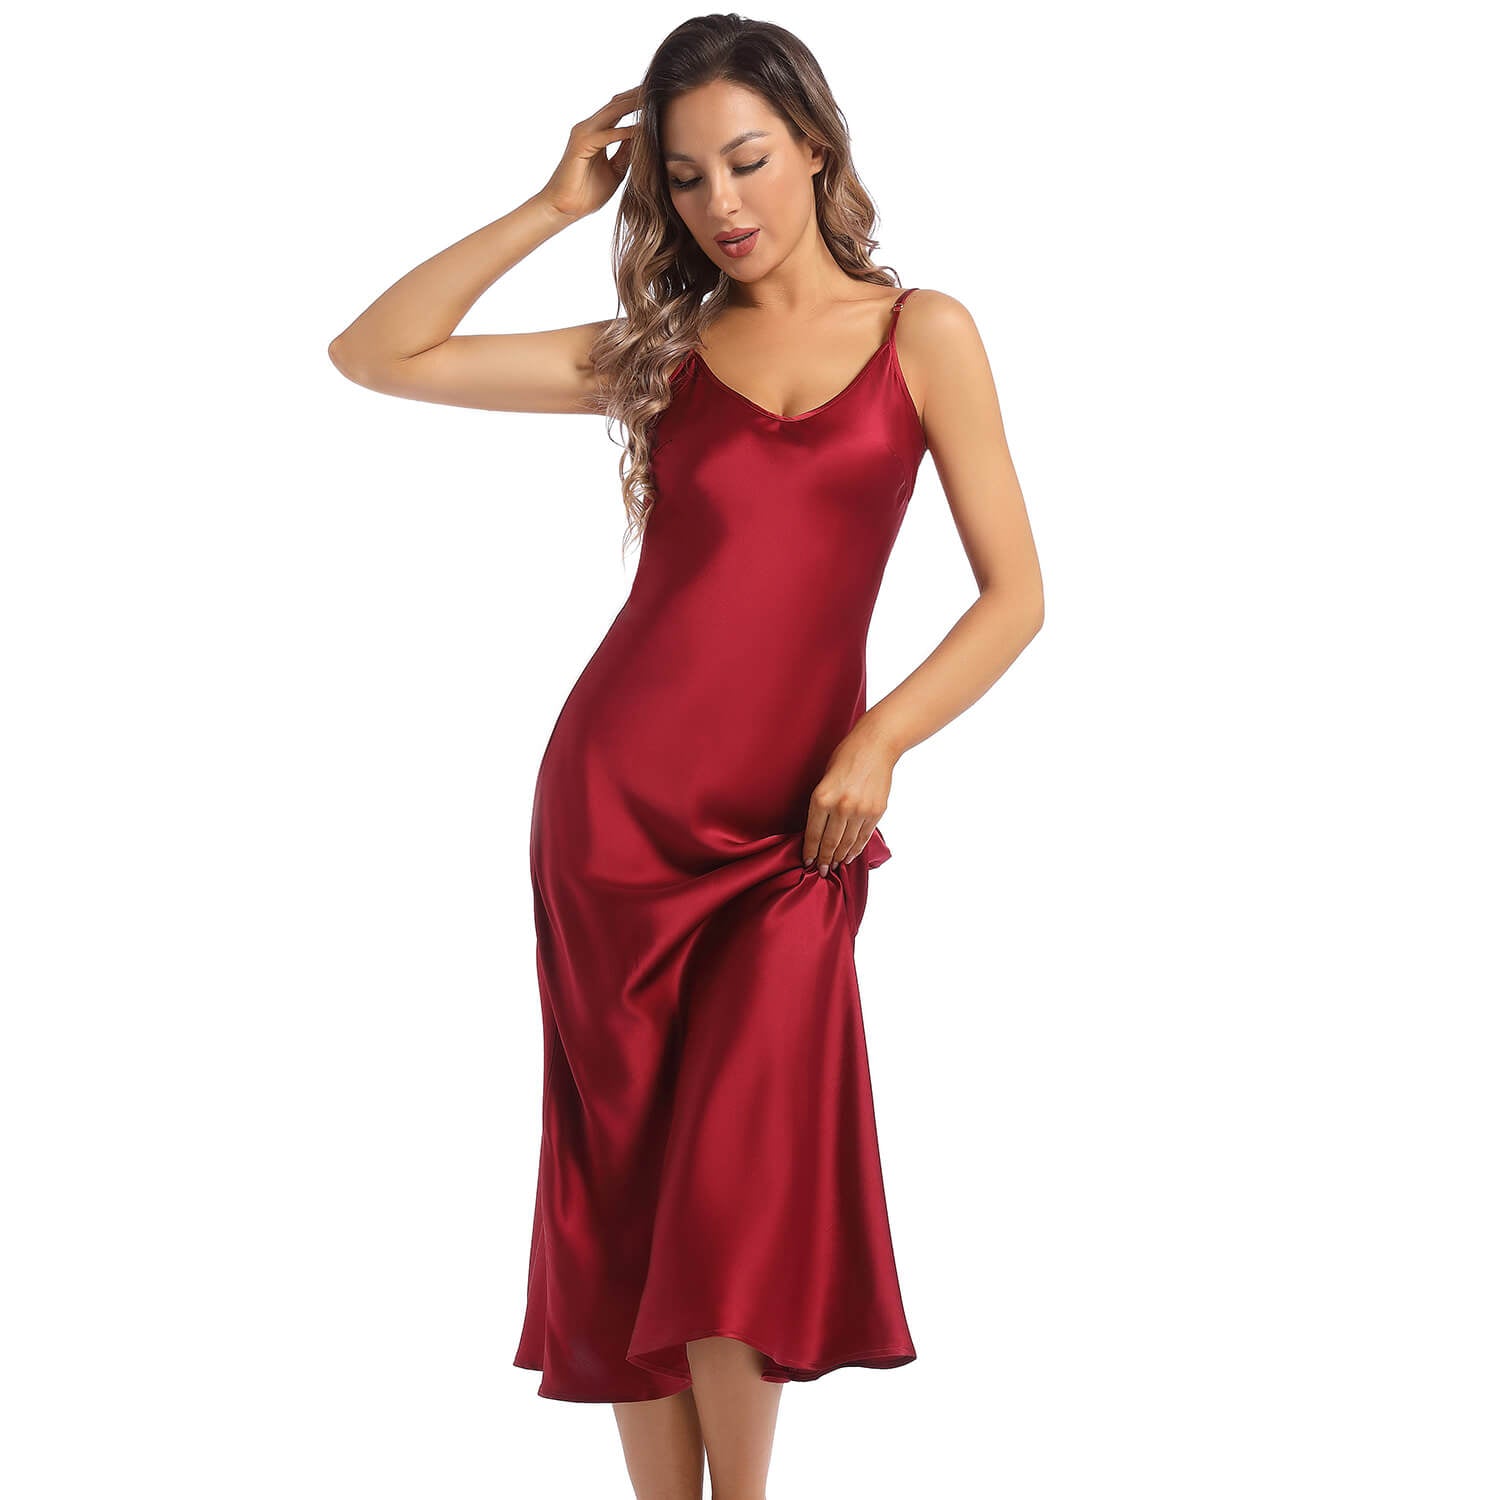 LSFYSZD Women Deep V-neck Sexy Lingerie Robes Long Sleeve Lace Sheer Nightgown  Full-Length Long Night Gown Dress - Walmart.com